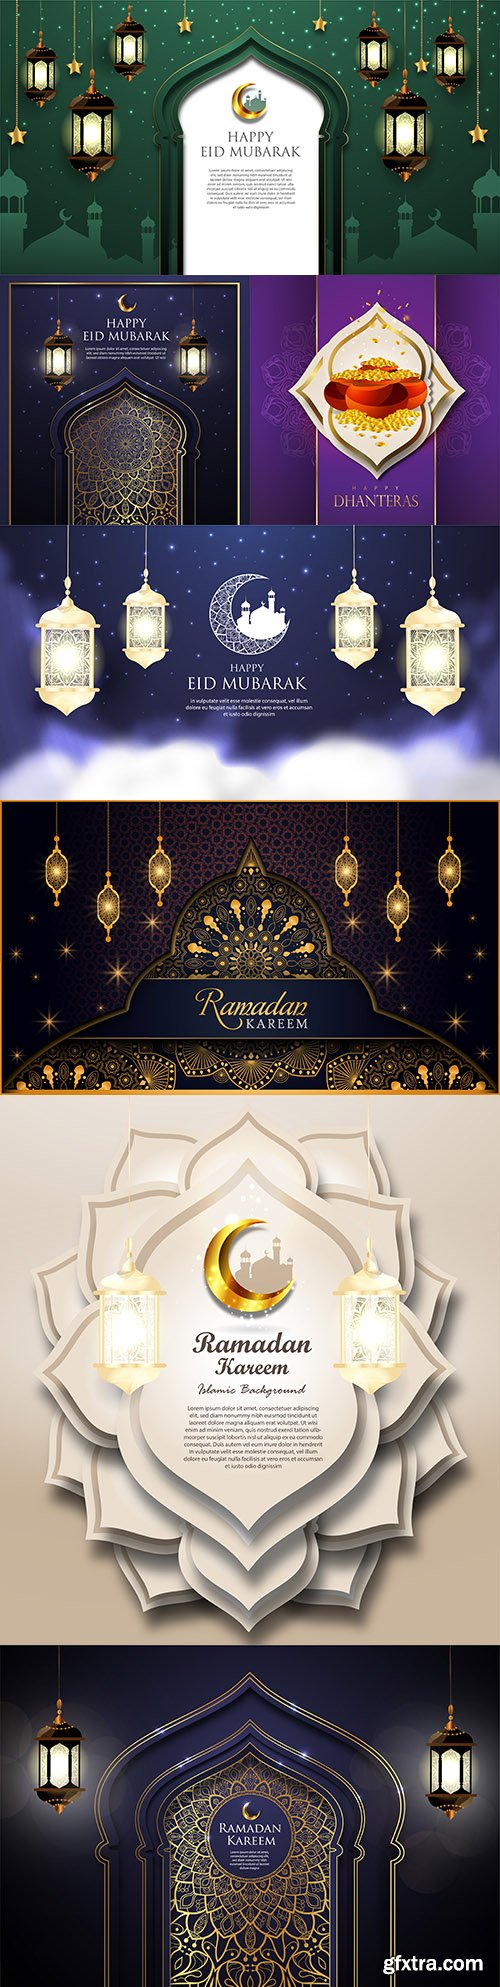 Ramadan Kareem and Eid Mubarak background Islamic 3